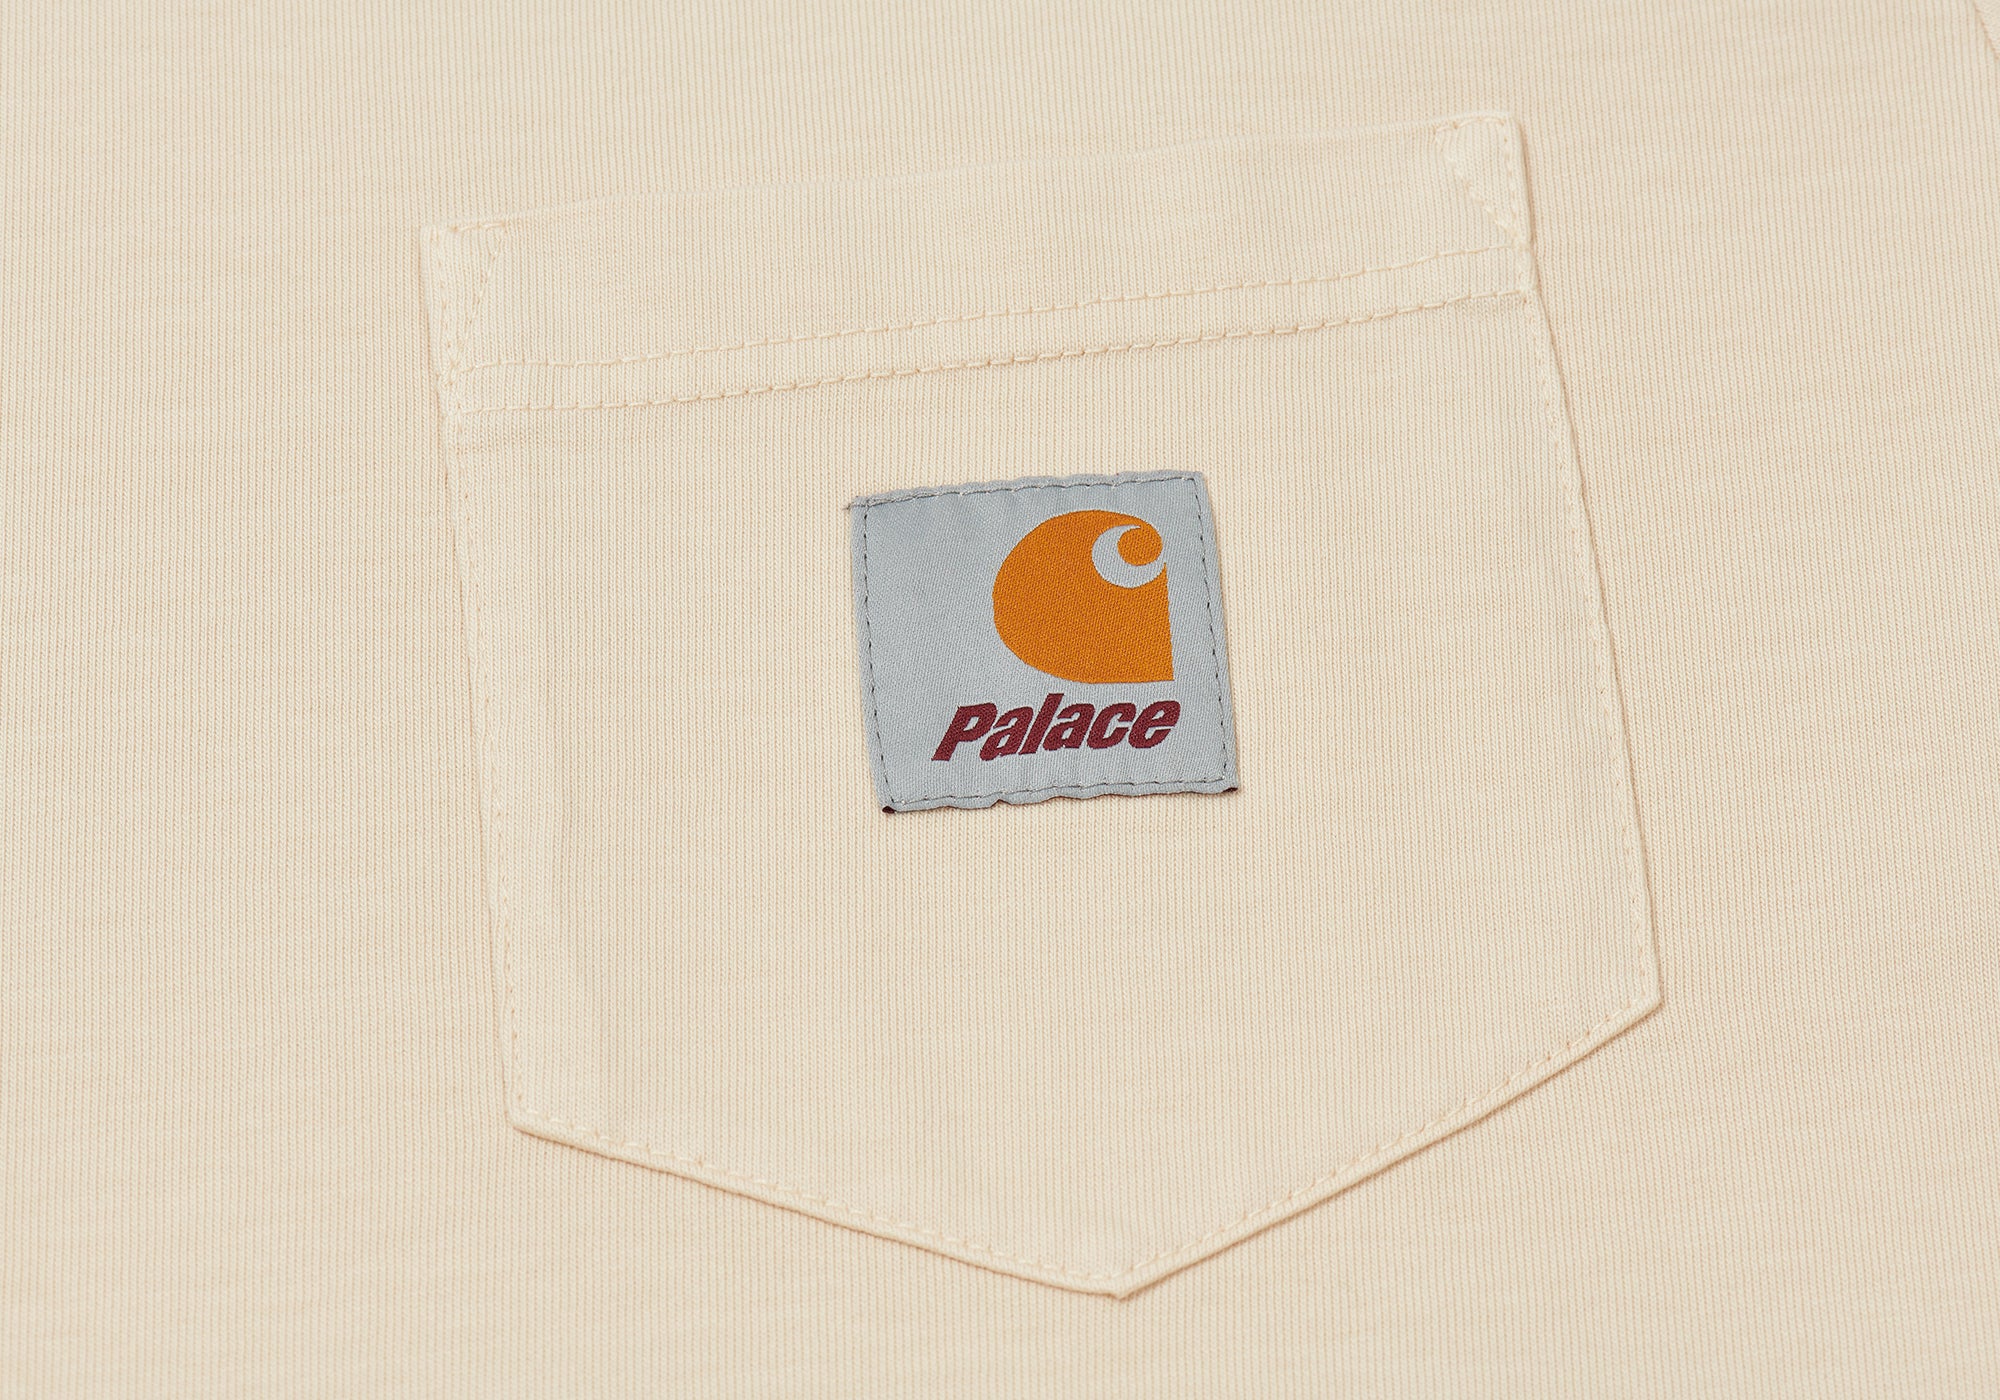 Palace Carhartt Wip S/s Pocket T-Shirt Palace Wax - Palace ...